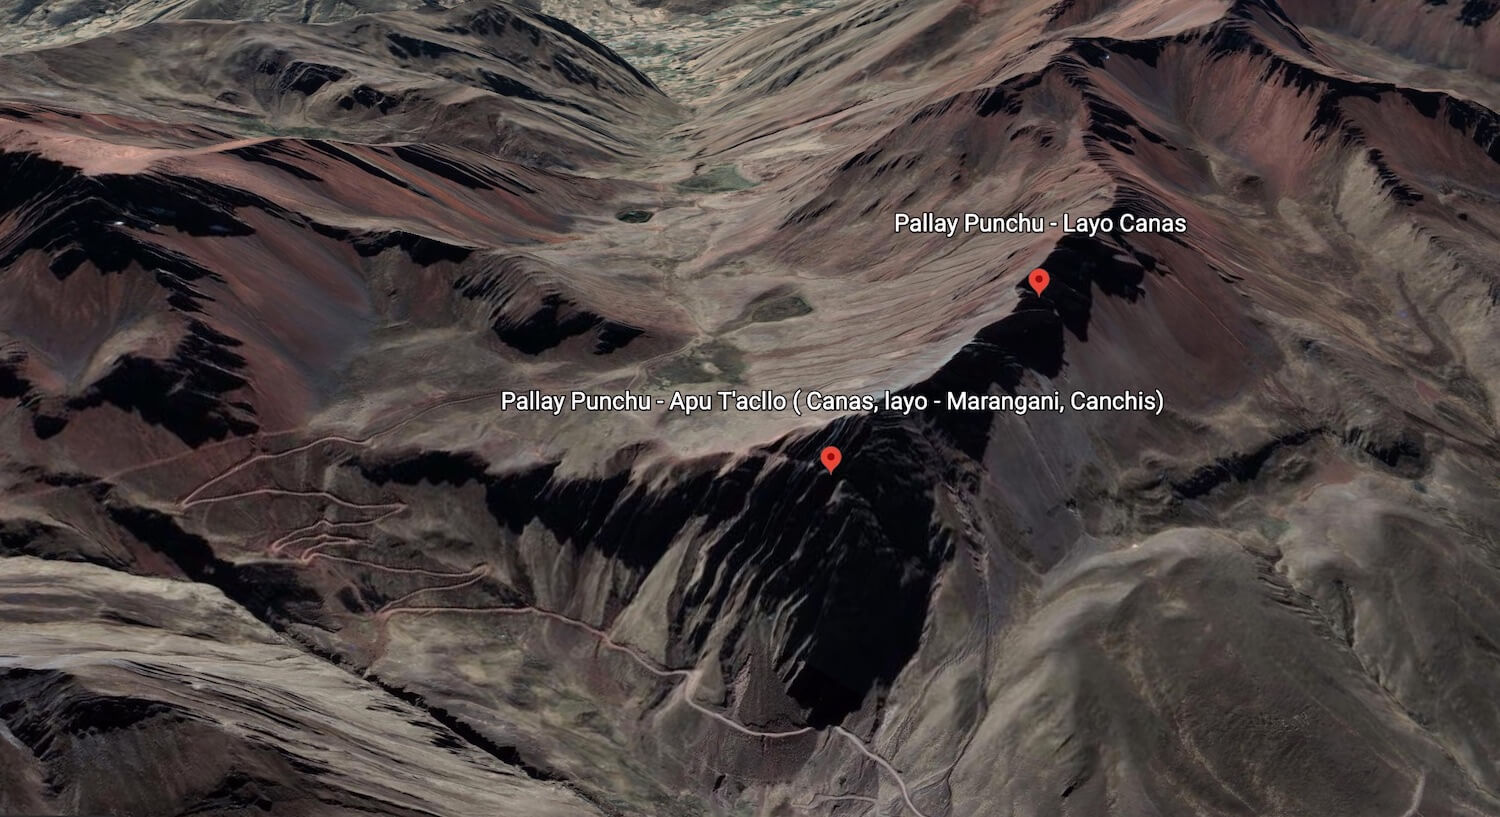 Pallay Punchu Rainbow Mountain in Peru